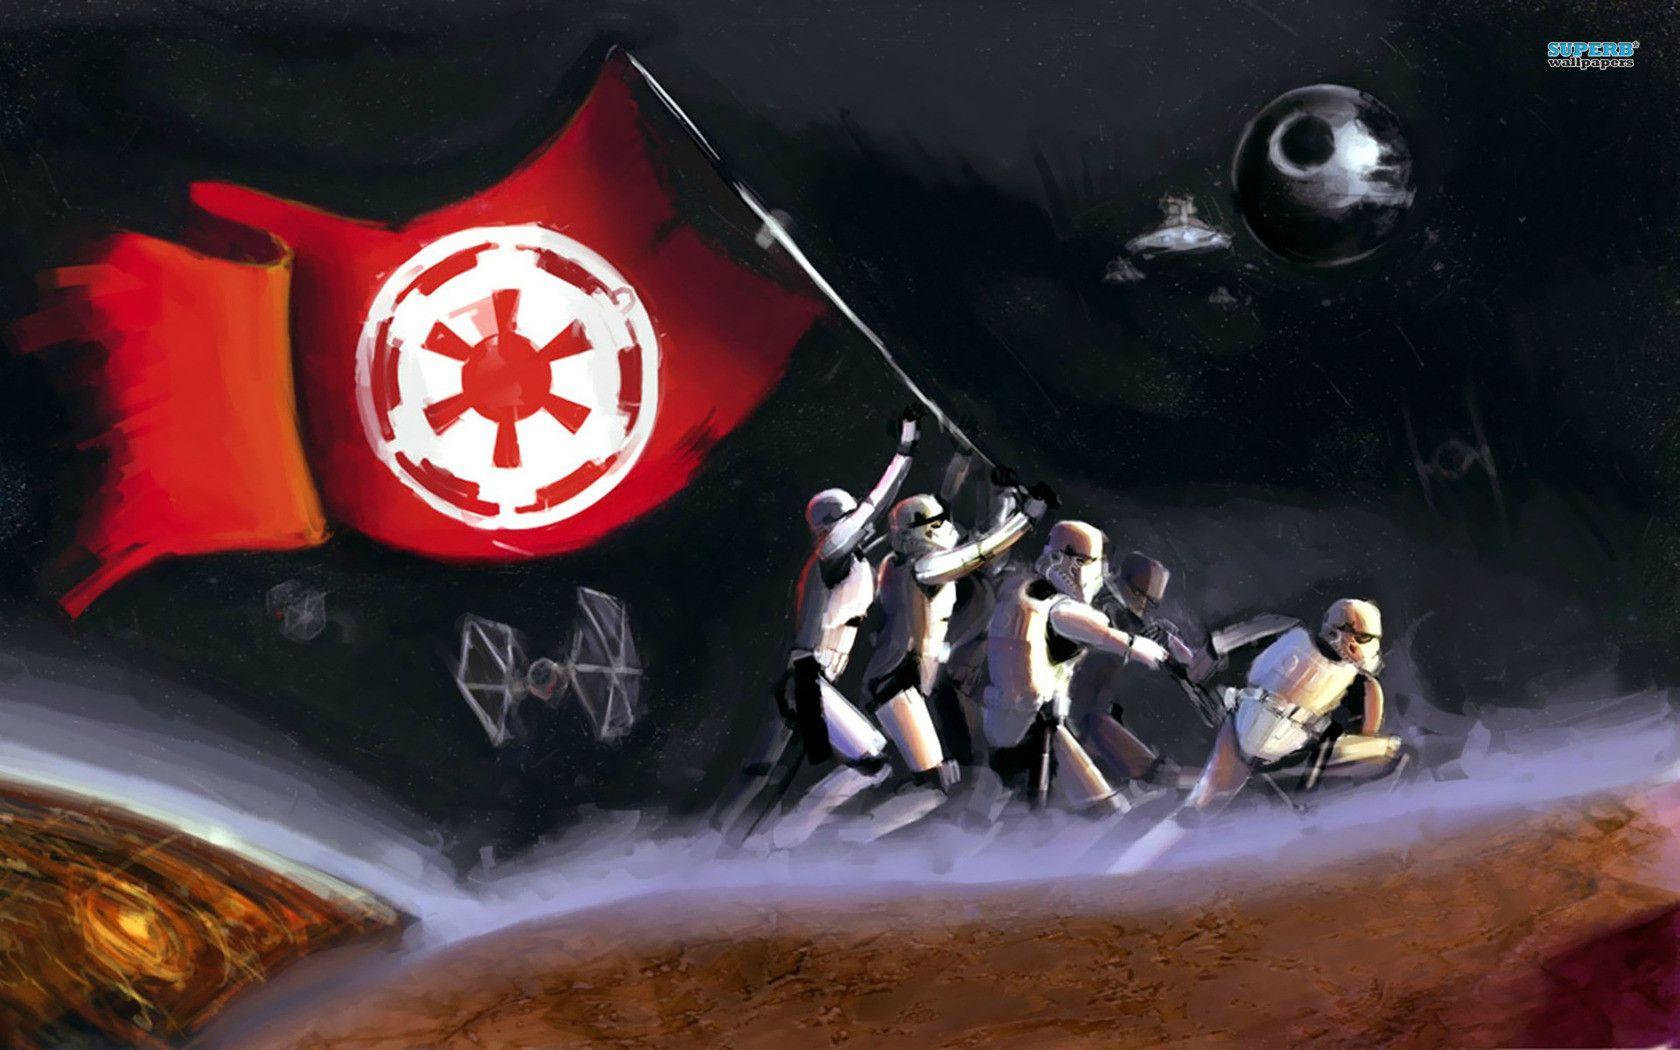 image For > Epic Star Wars Wallpaper